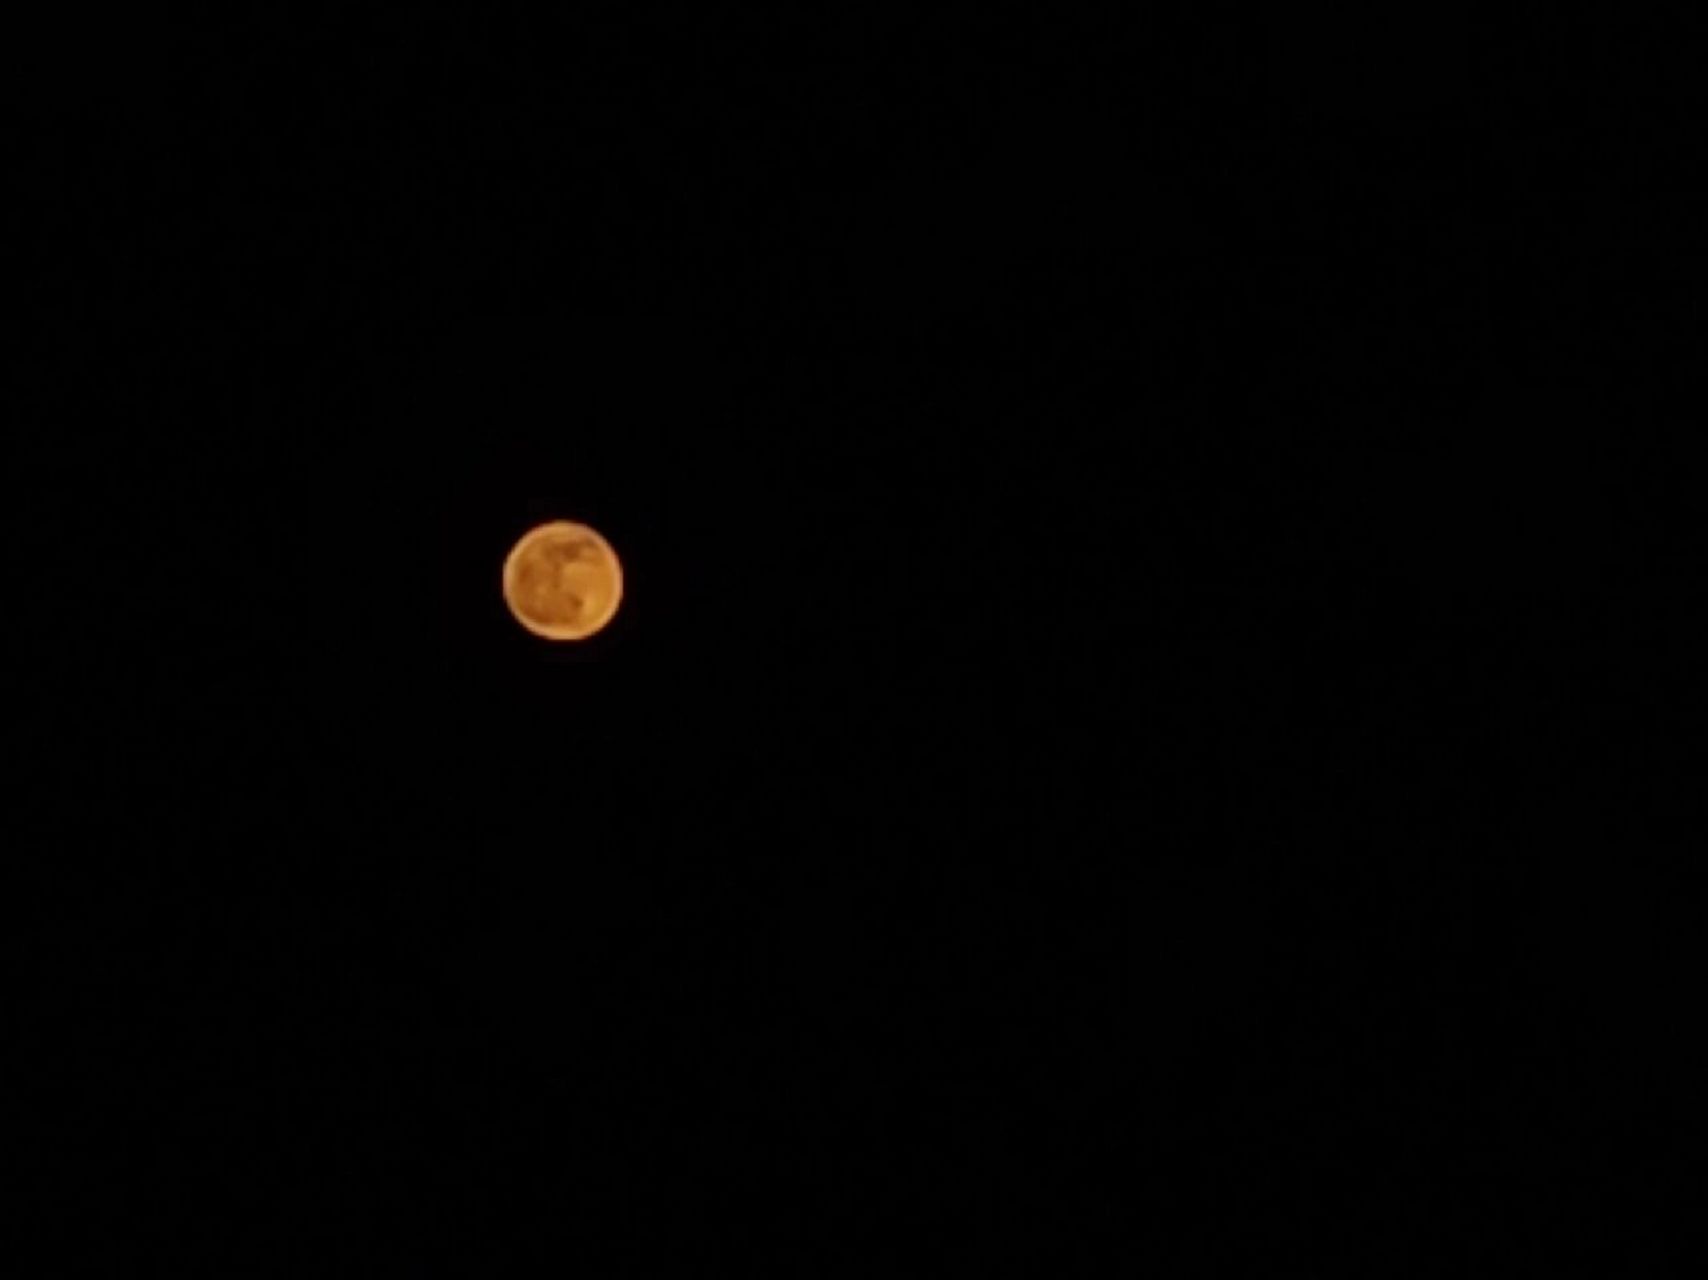 redmi note 9 pro 红米专业模式拍照月亮 红米note 9 pro,拍照晚上的